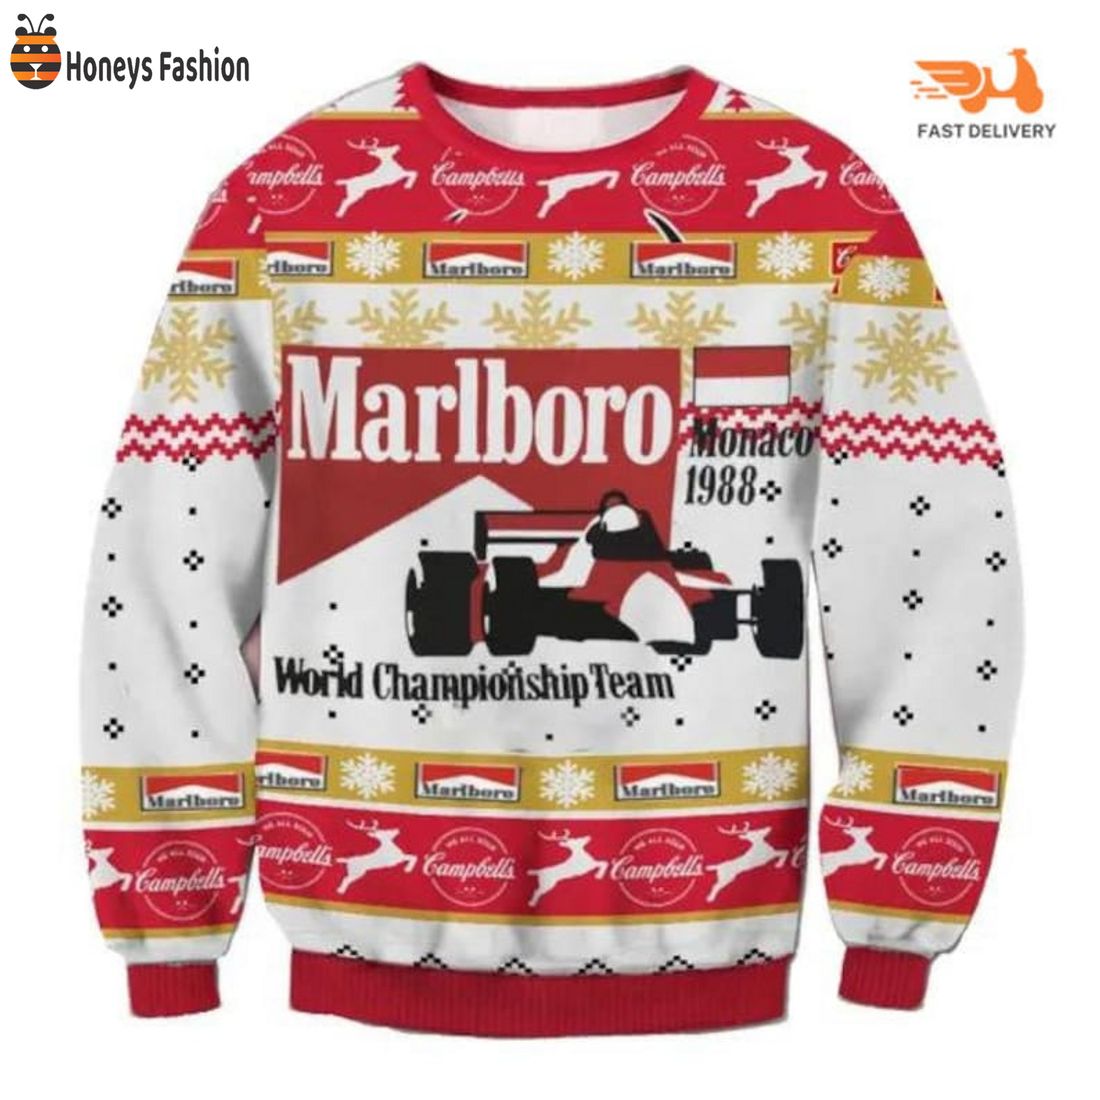 HOT Marolboro Racing Monaco 1988 World Championship Team Ugly Sweater